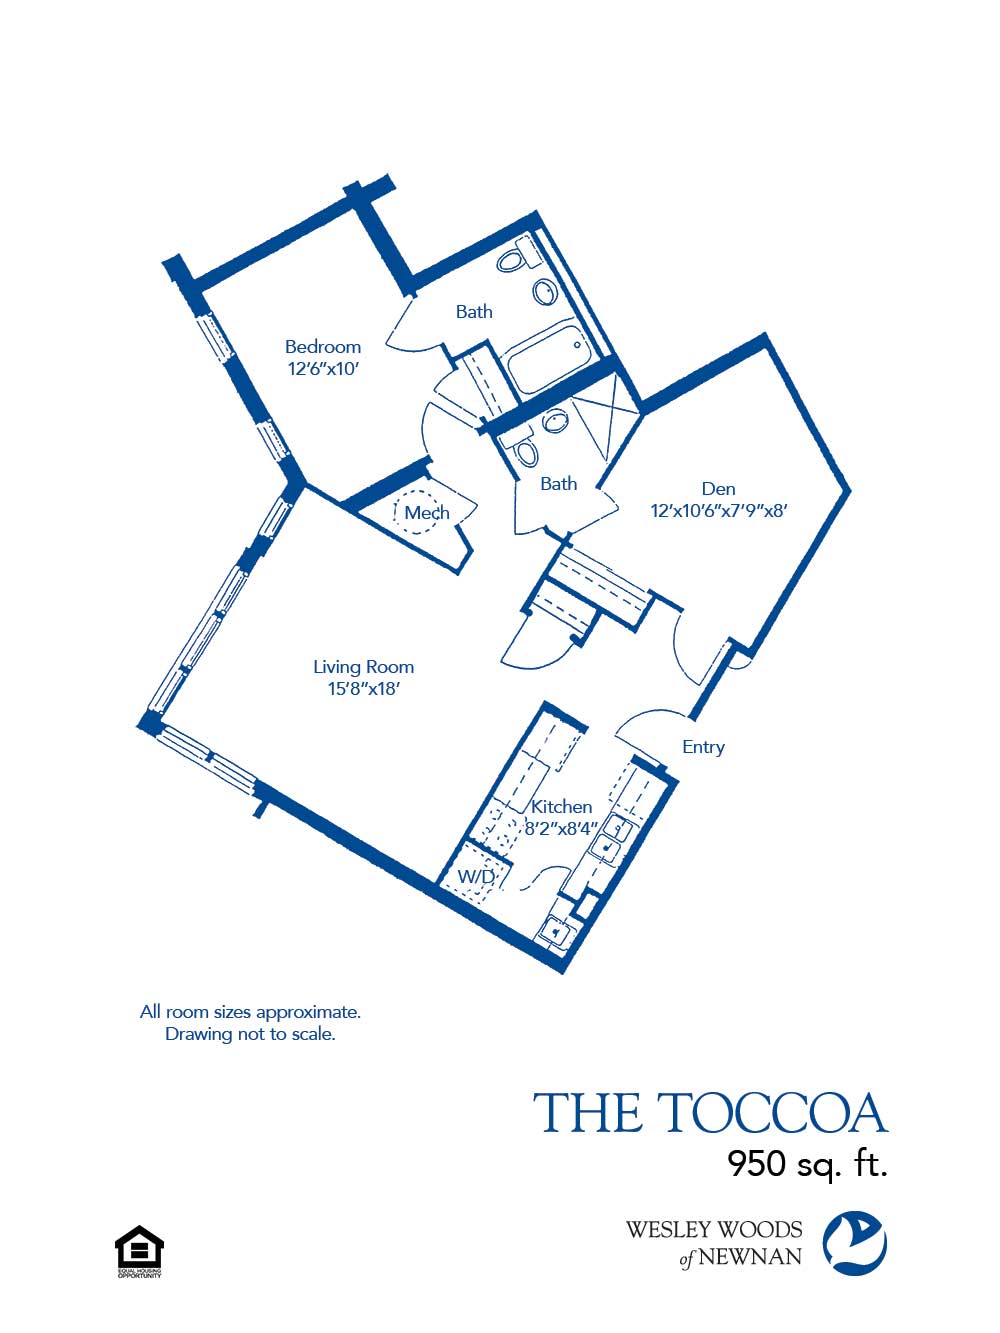 The Toccoa floor plan